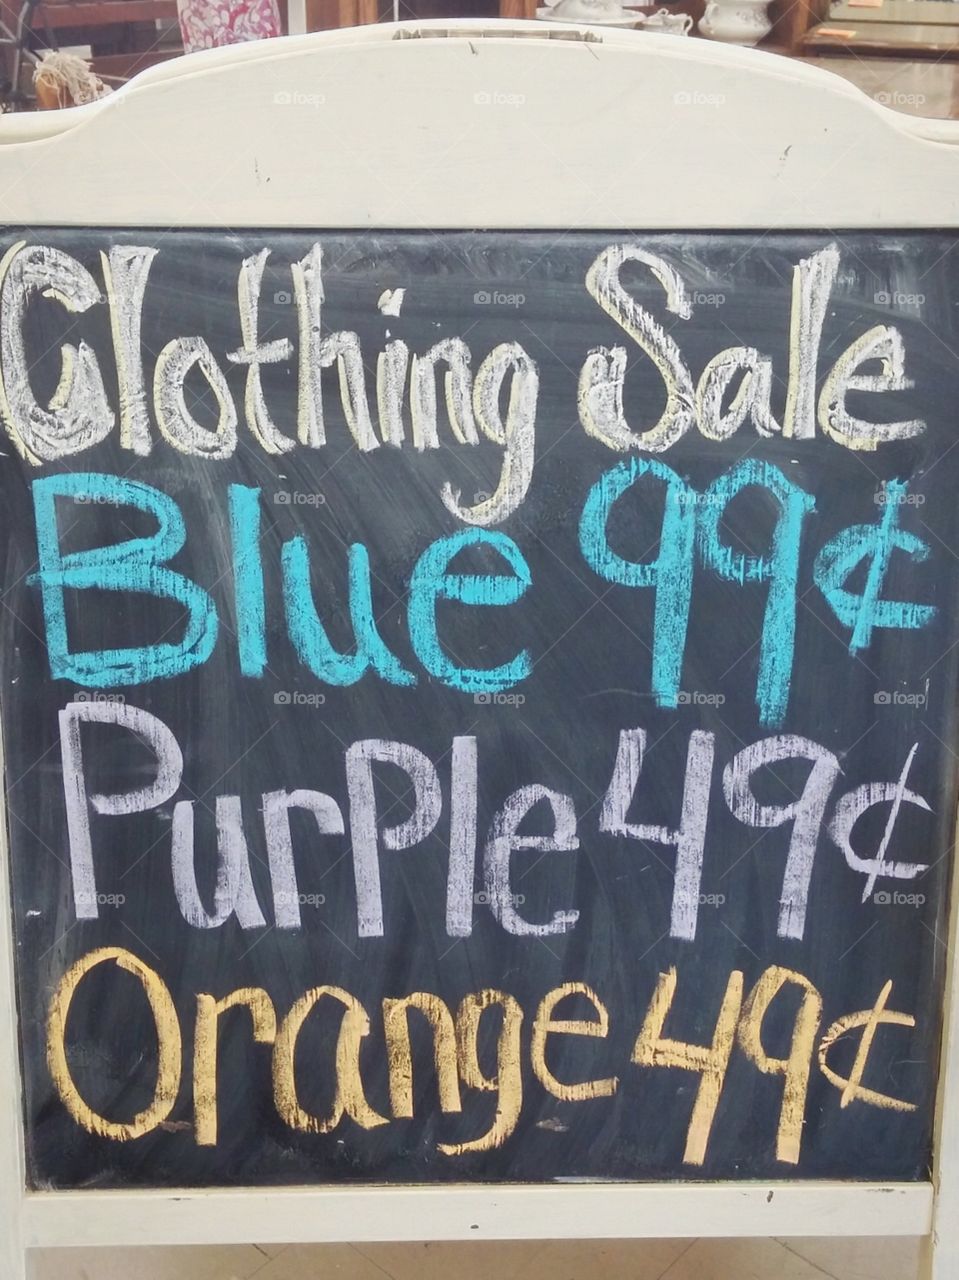 Clothing Sale